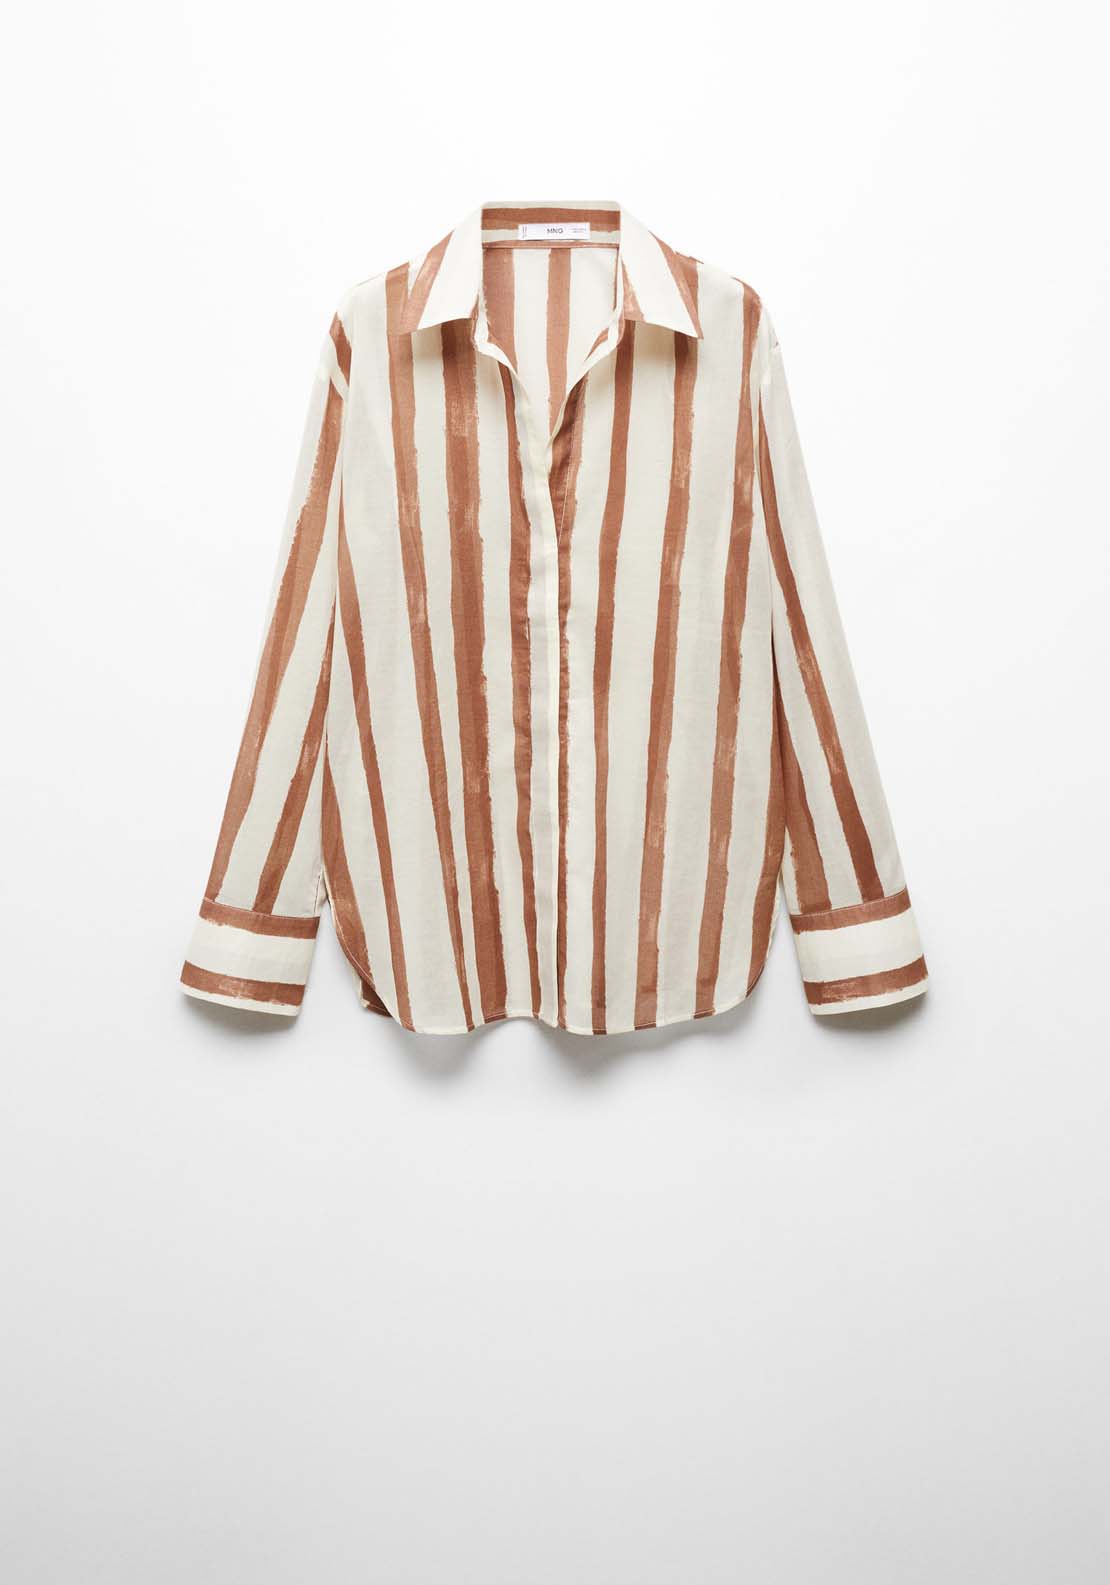 Mango 100% cotton striped shirt 7 Shaws Department Stores